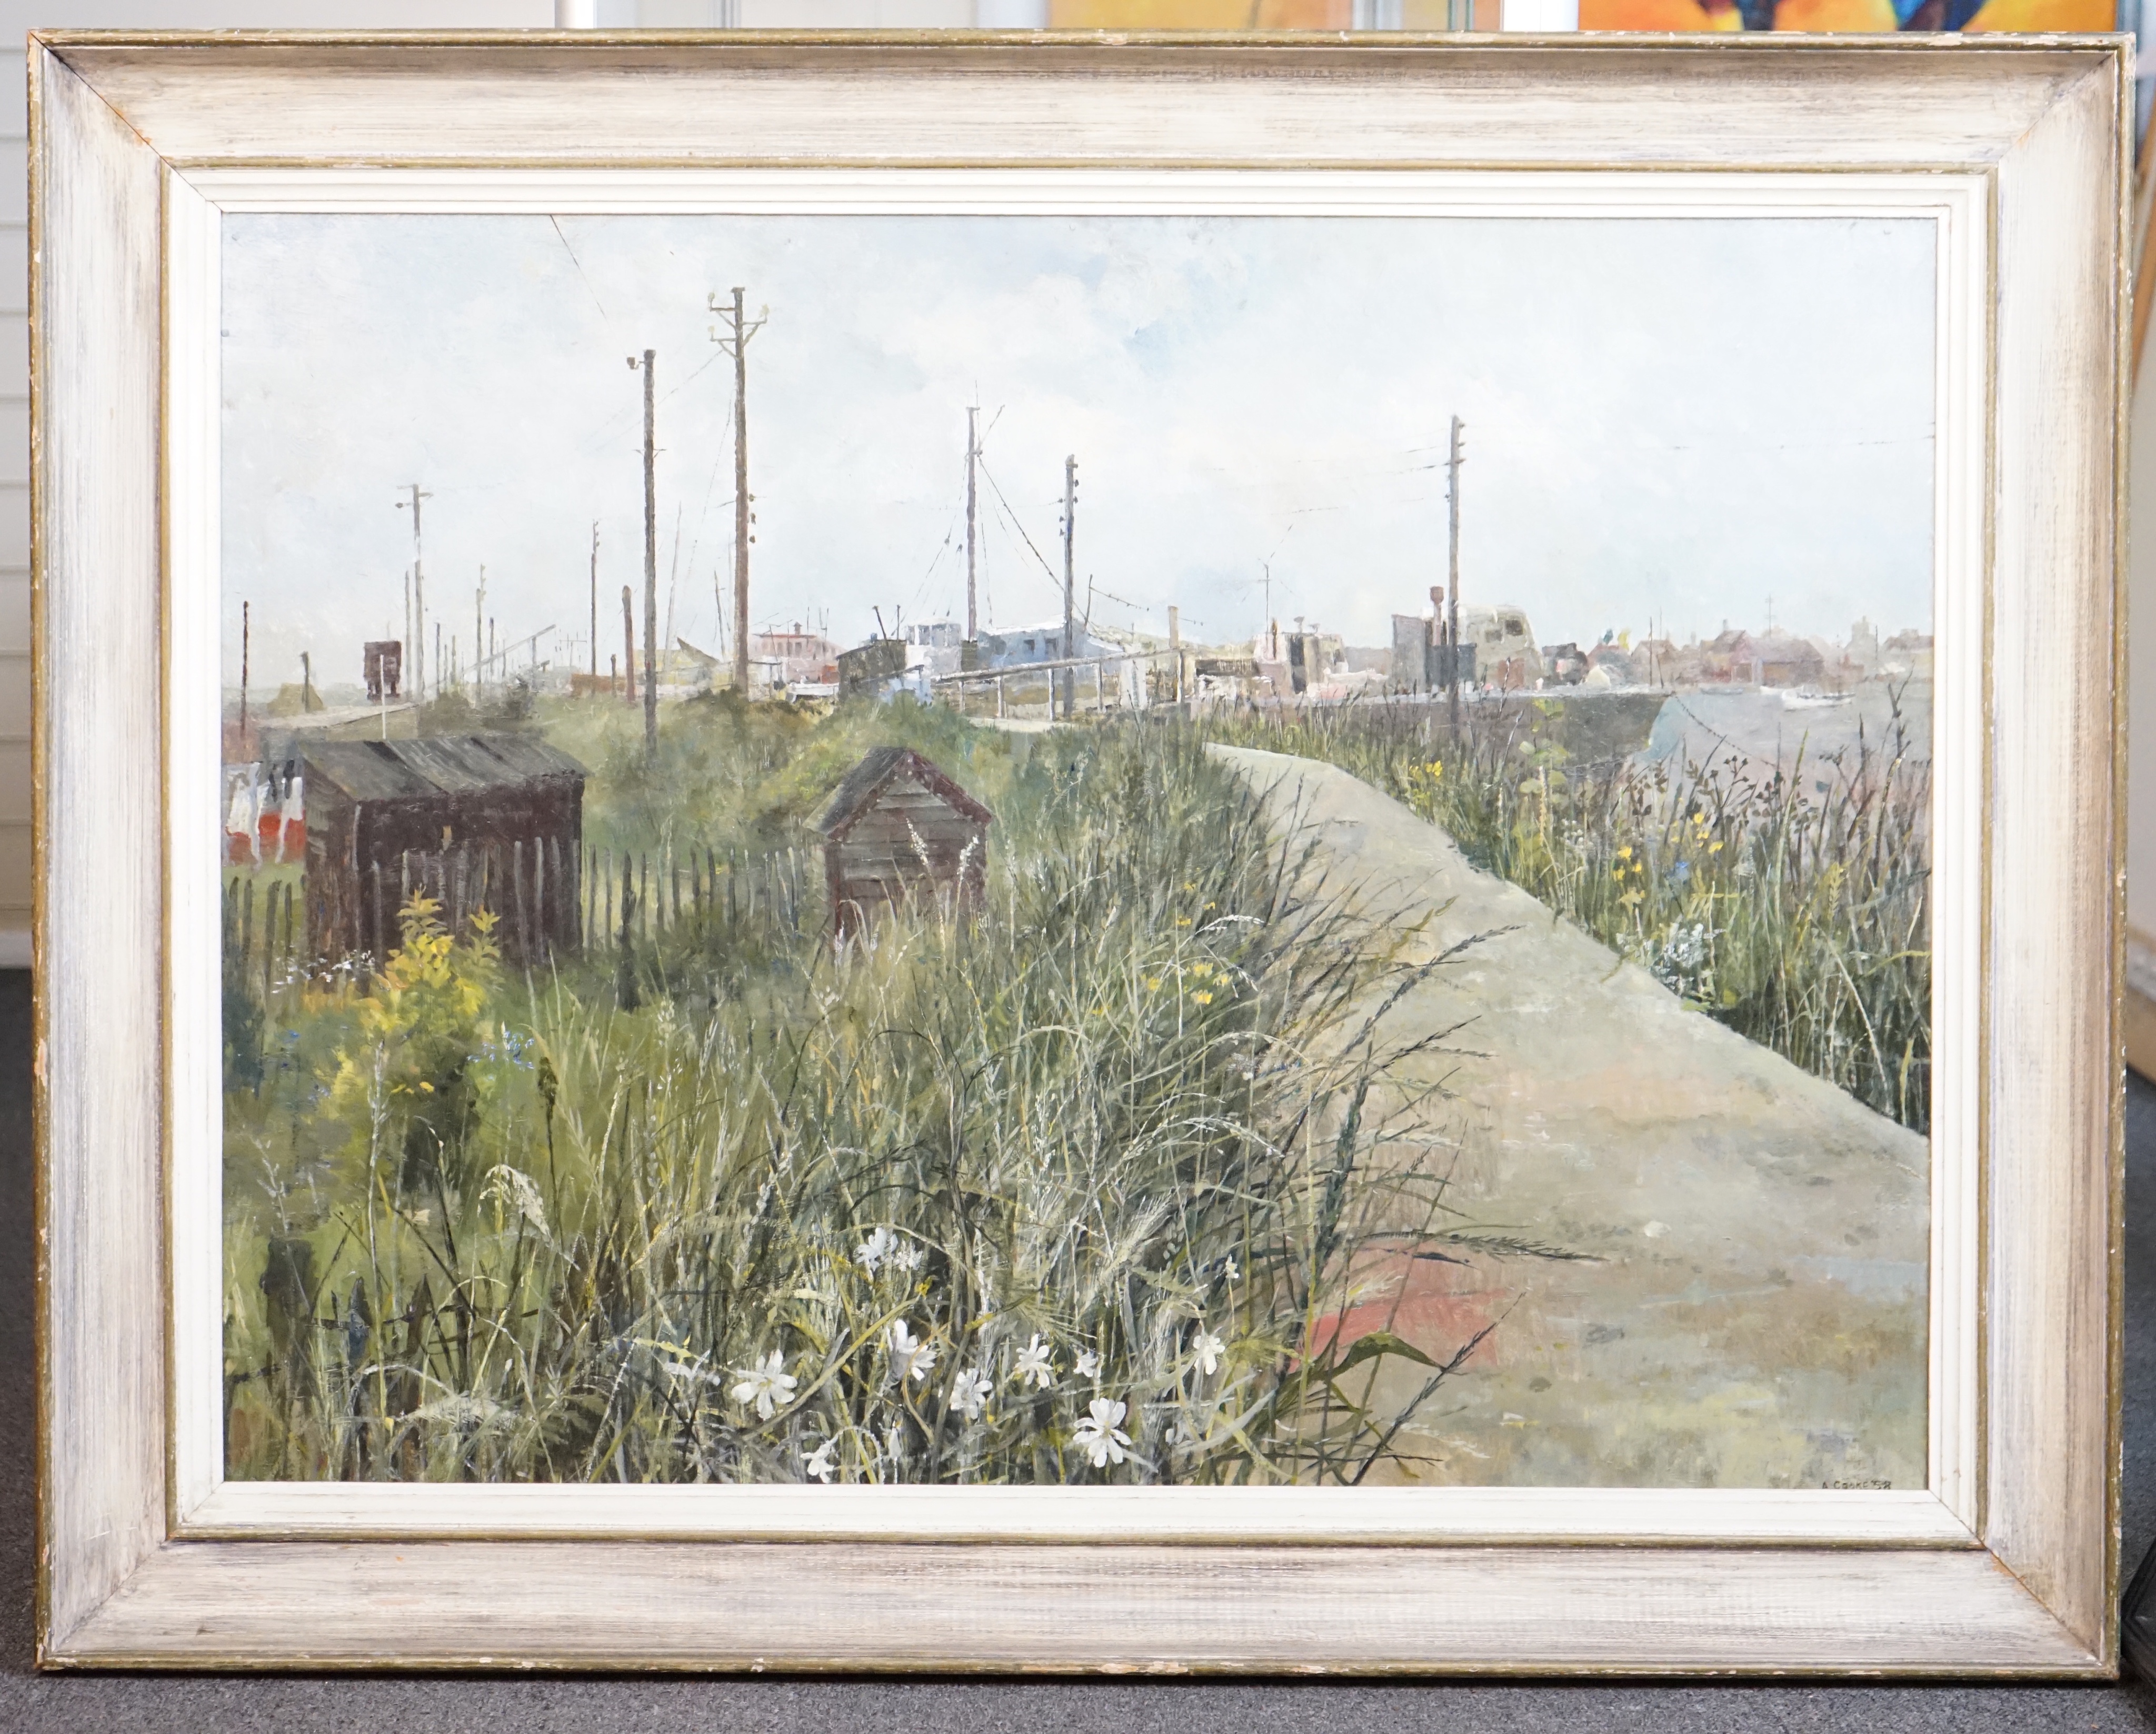 Anthony Richard Cooke (1933-2006), ‘Houseboats at Shoreham’, oil on panel, 74 x 100cm